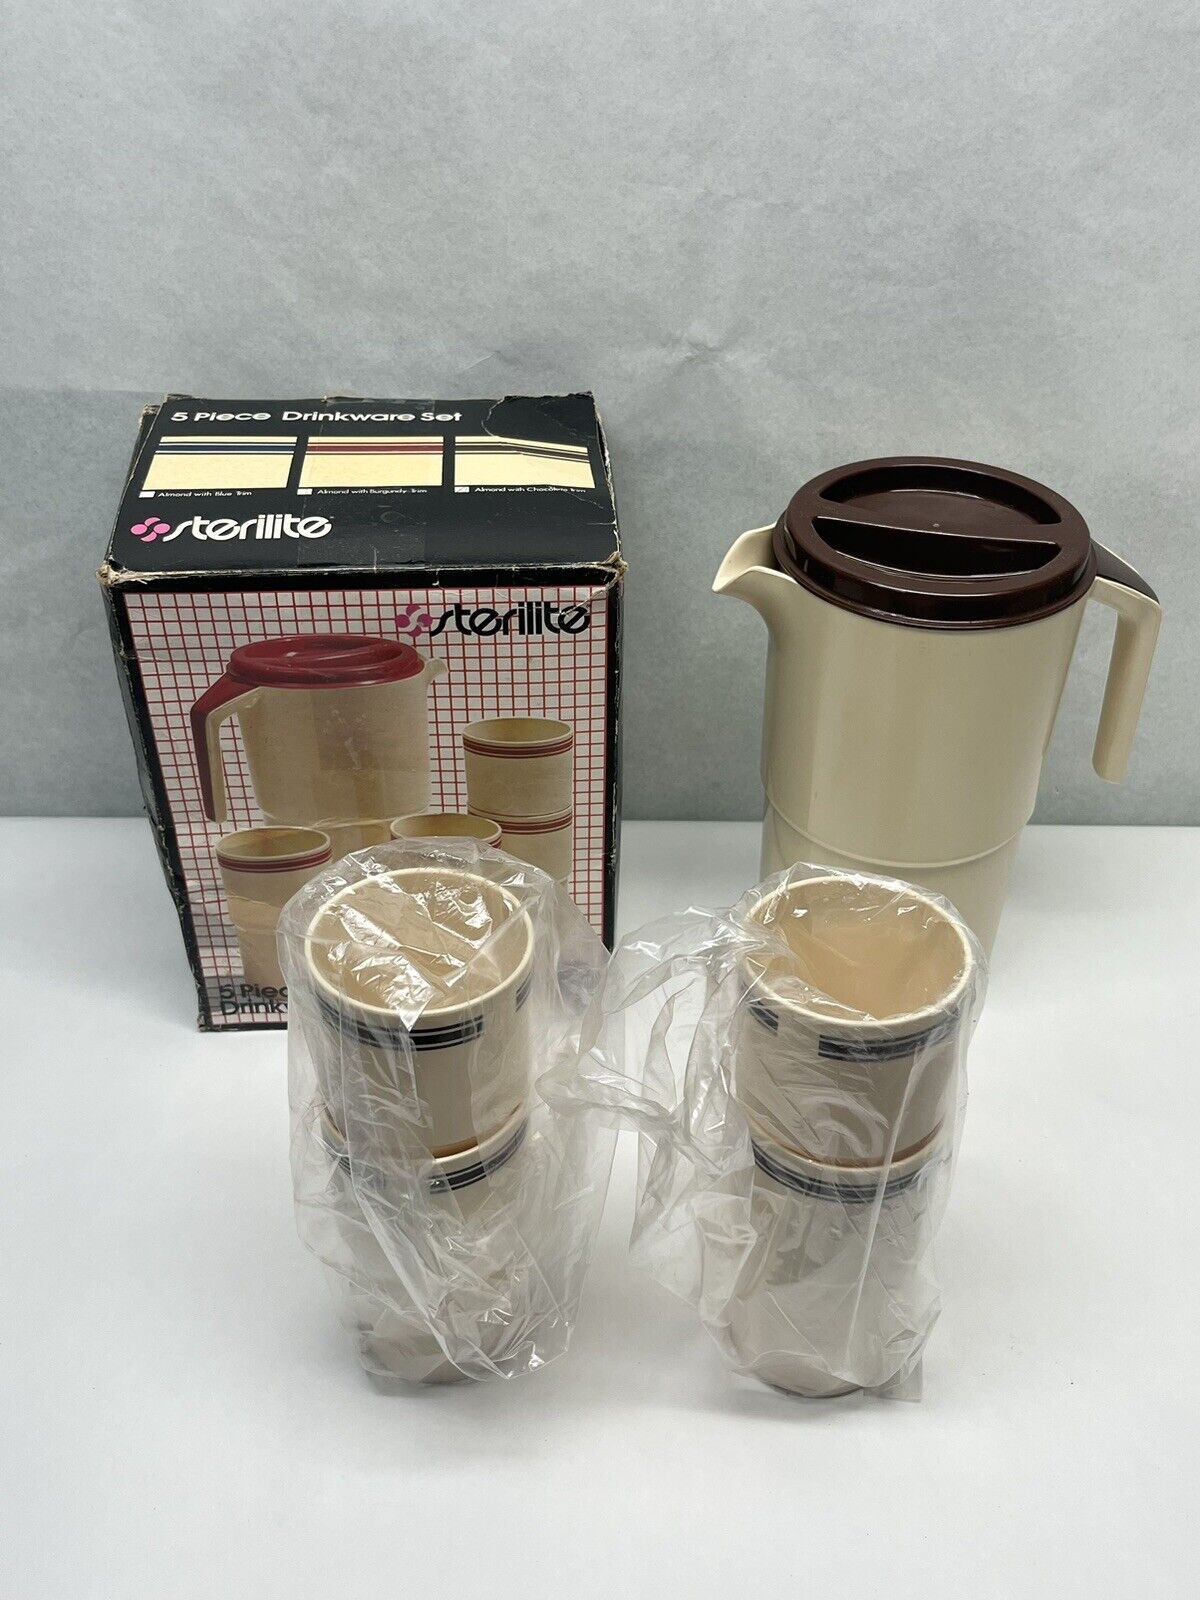 Vintage Sterilite 5 Piece Drinkware Set Complete In Box #844-1 - Pre Owned